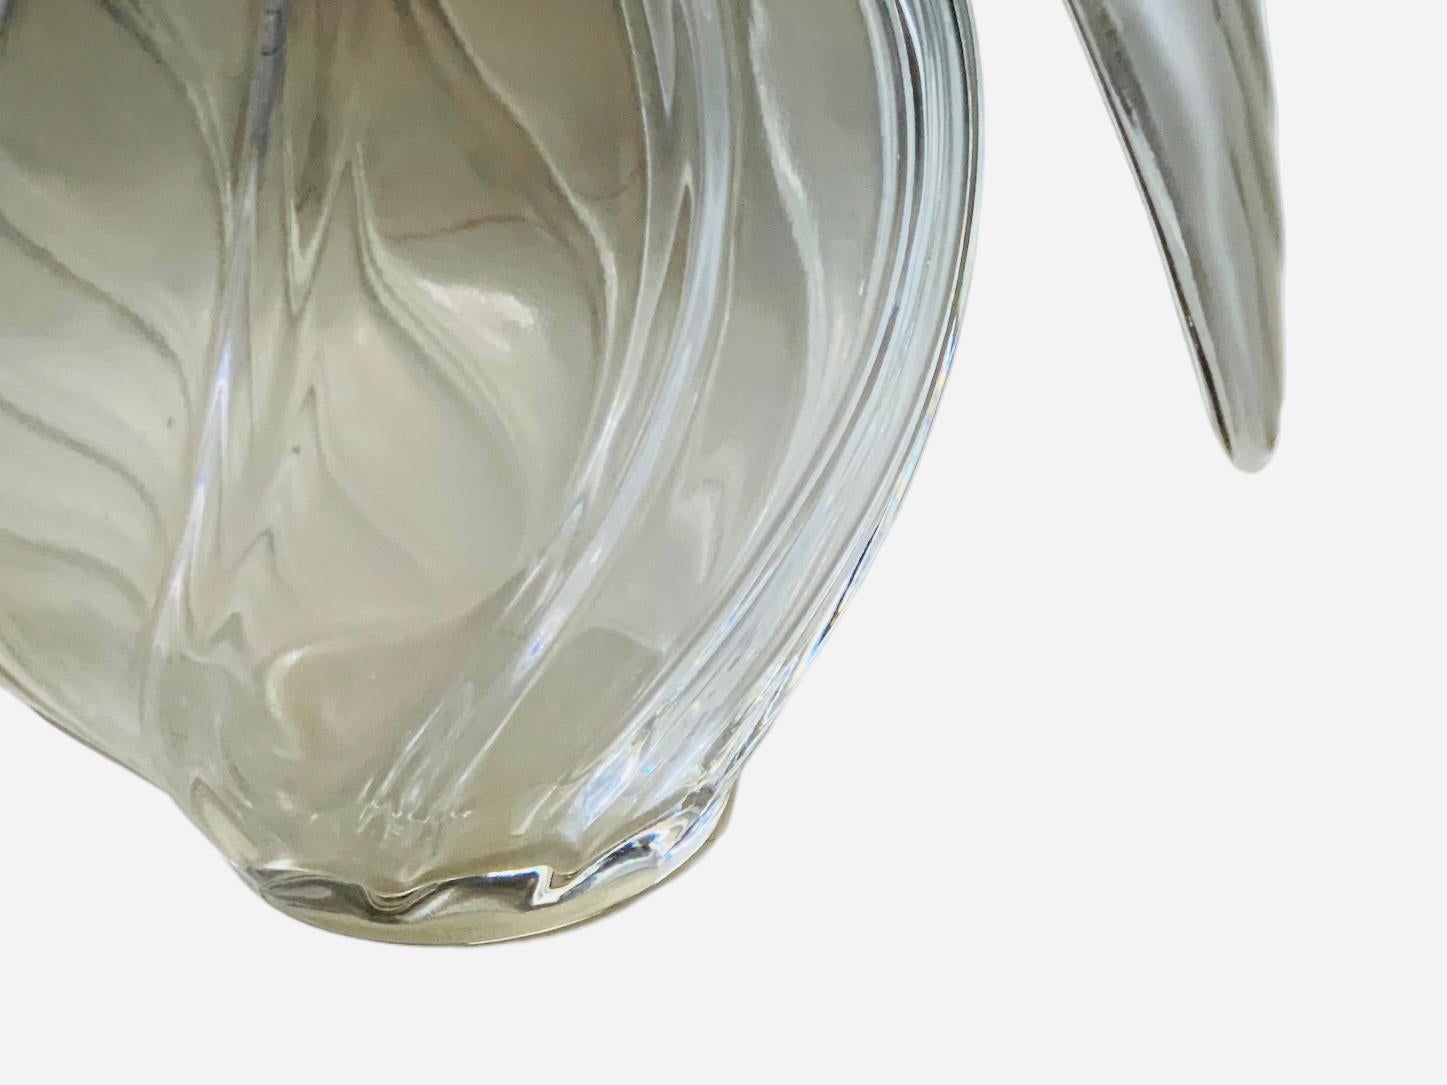 Molded Large Lalique Crystal Perfume Bottle Of L’Air Du Temps